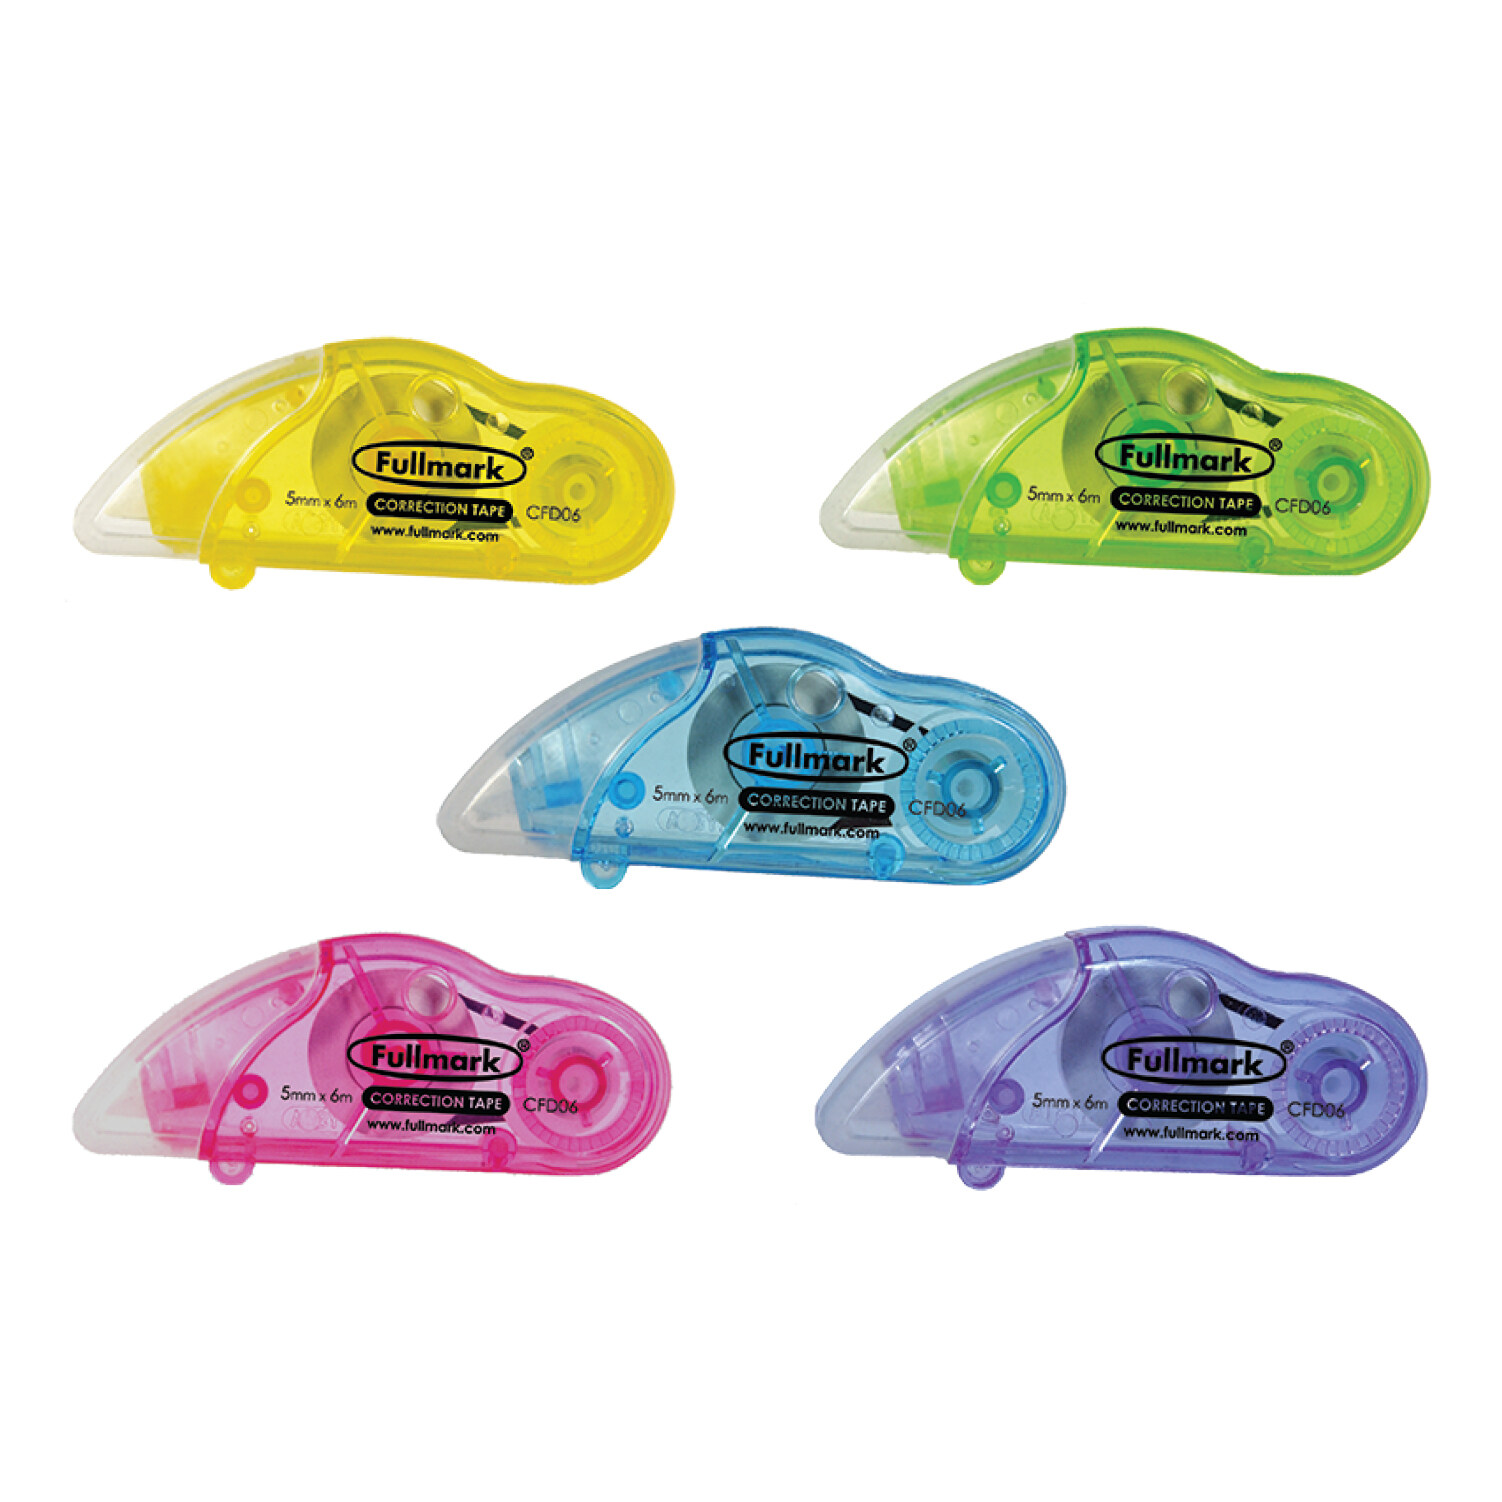 Fullmark Model D Correction Tape, 10pack (2 x pink, 2 x yellow, 2 x green, 2 x blue, 2 x purple)